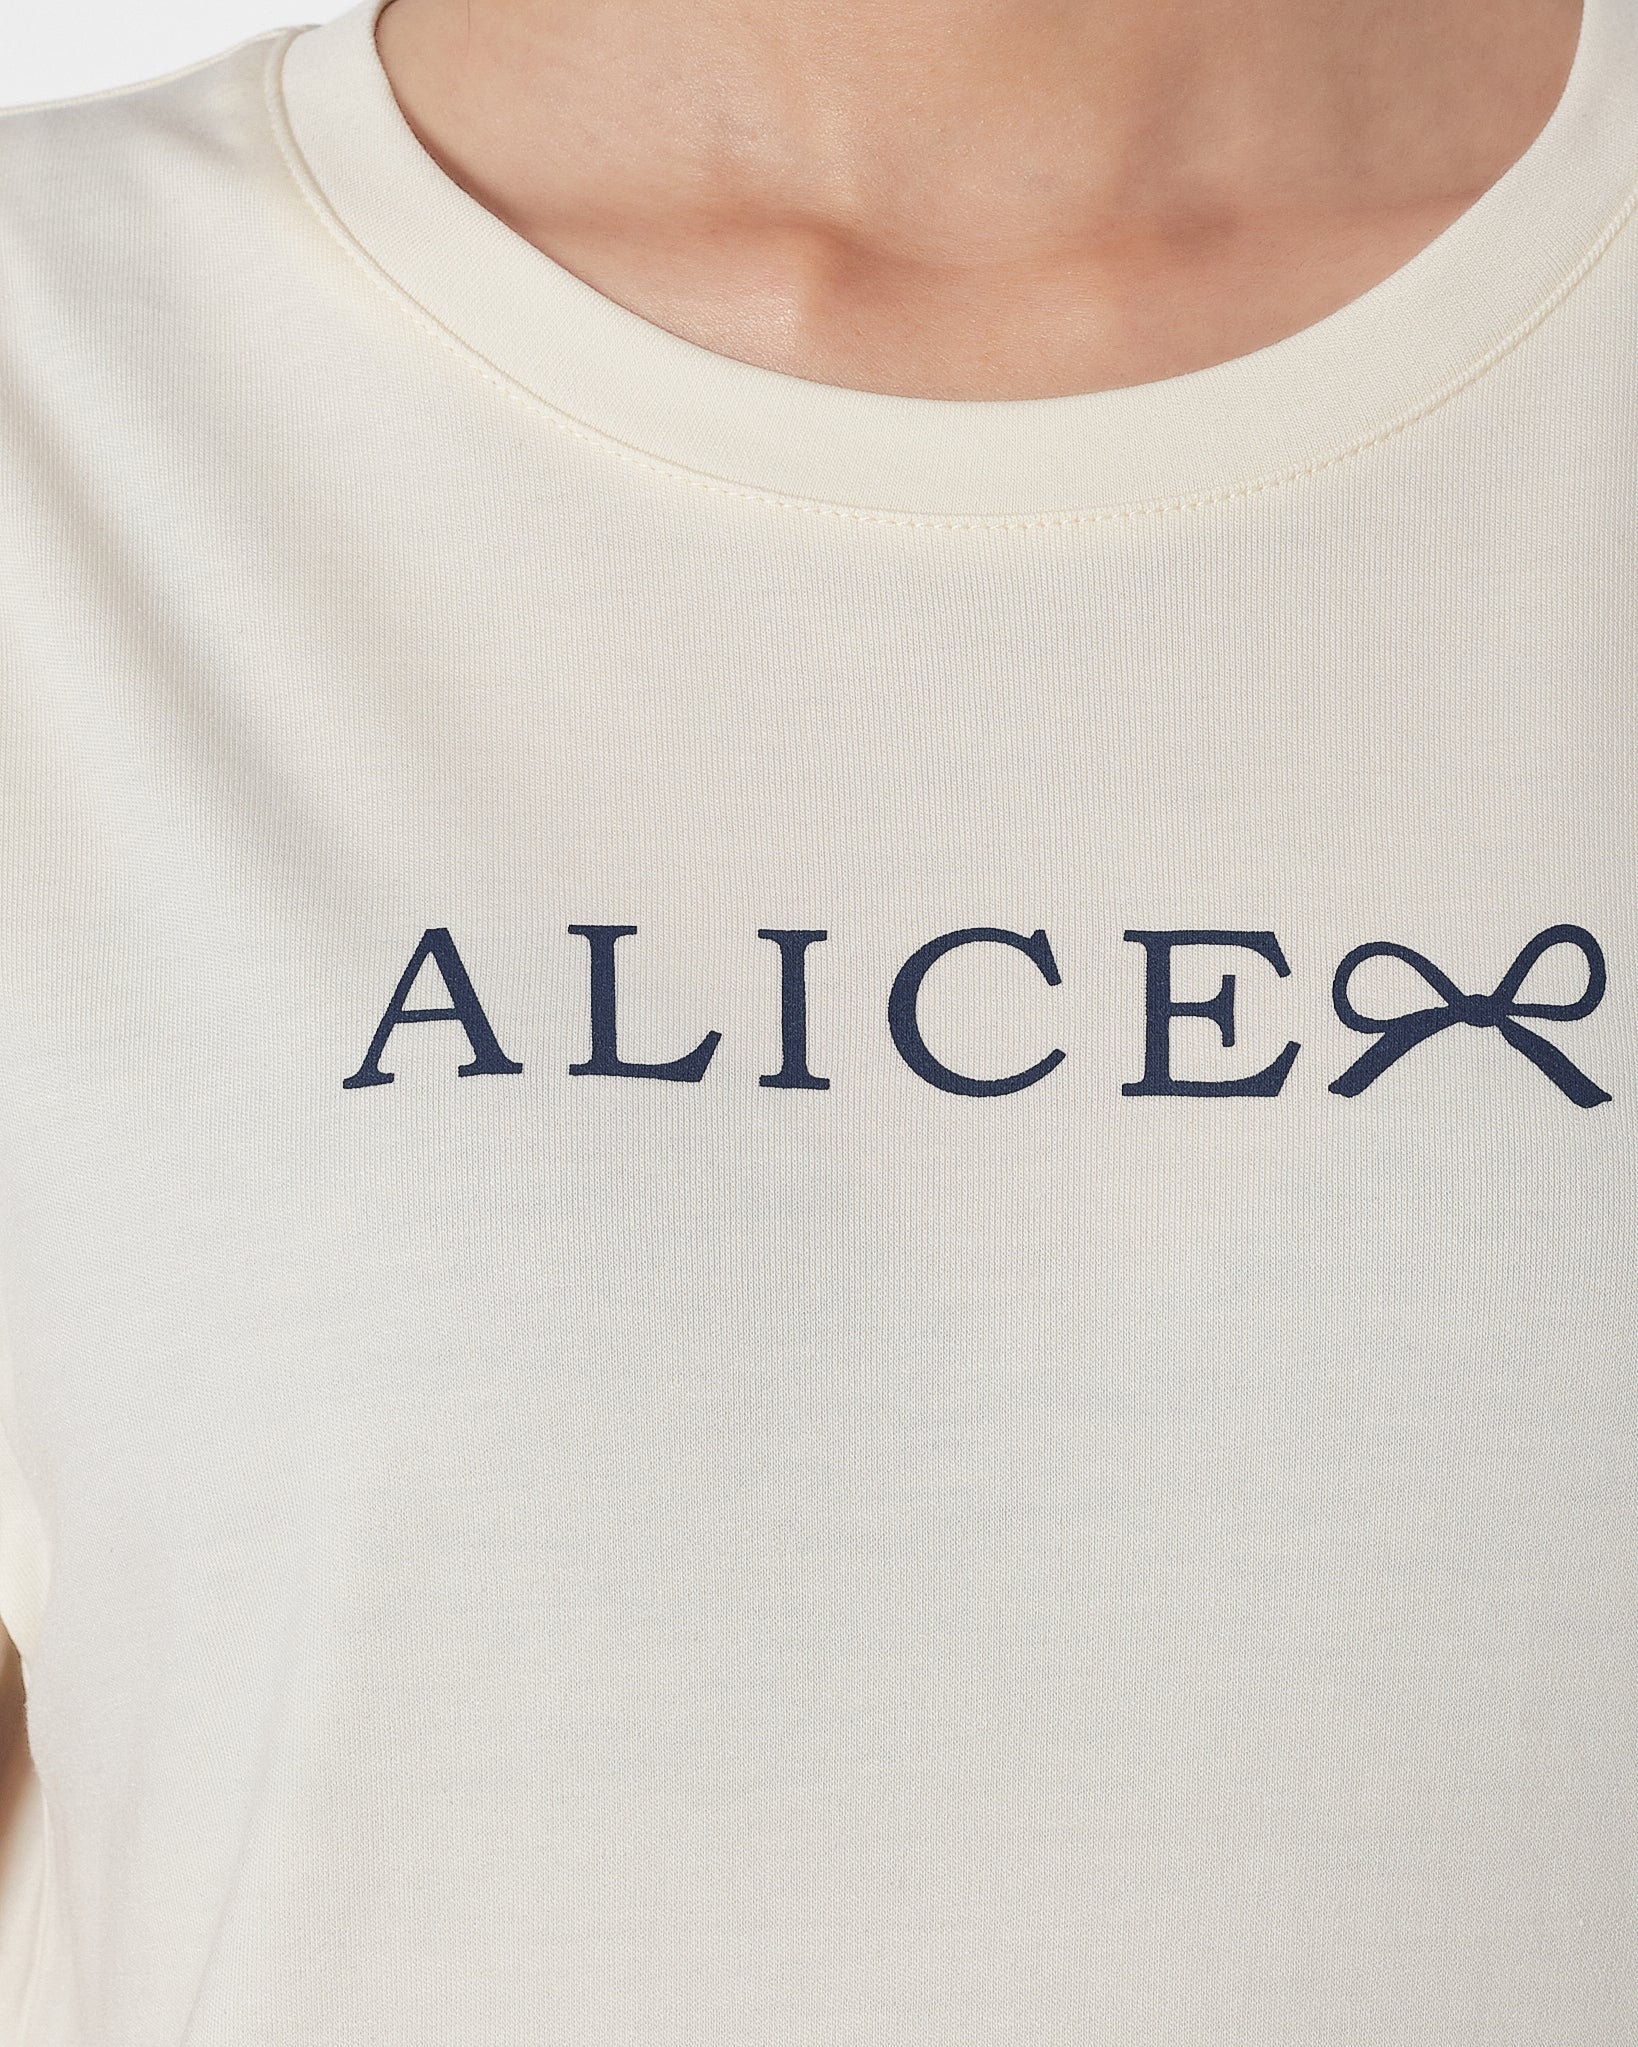 ALICE Lady Cream T-Shirt 12.90